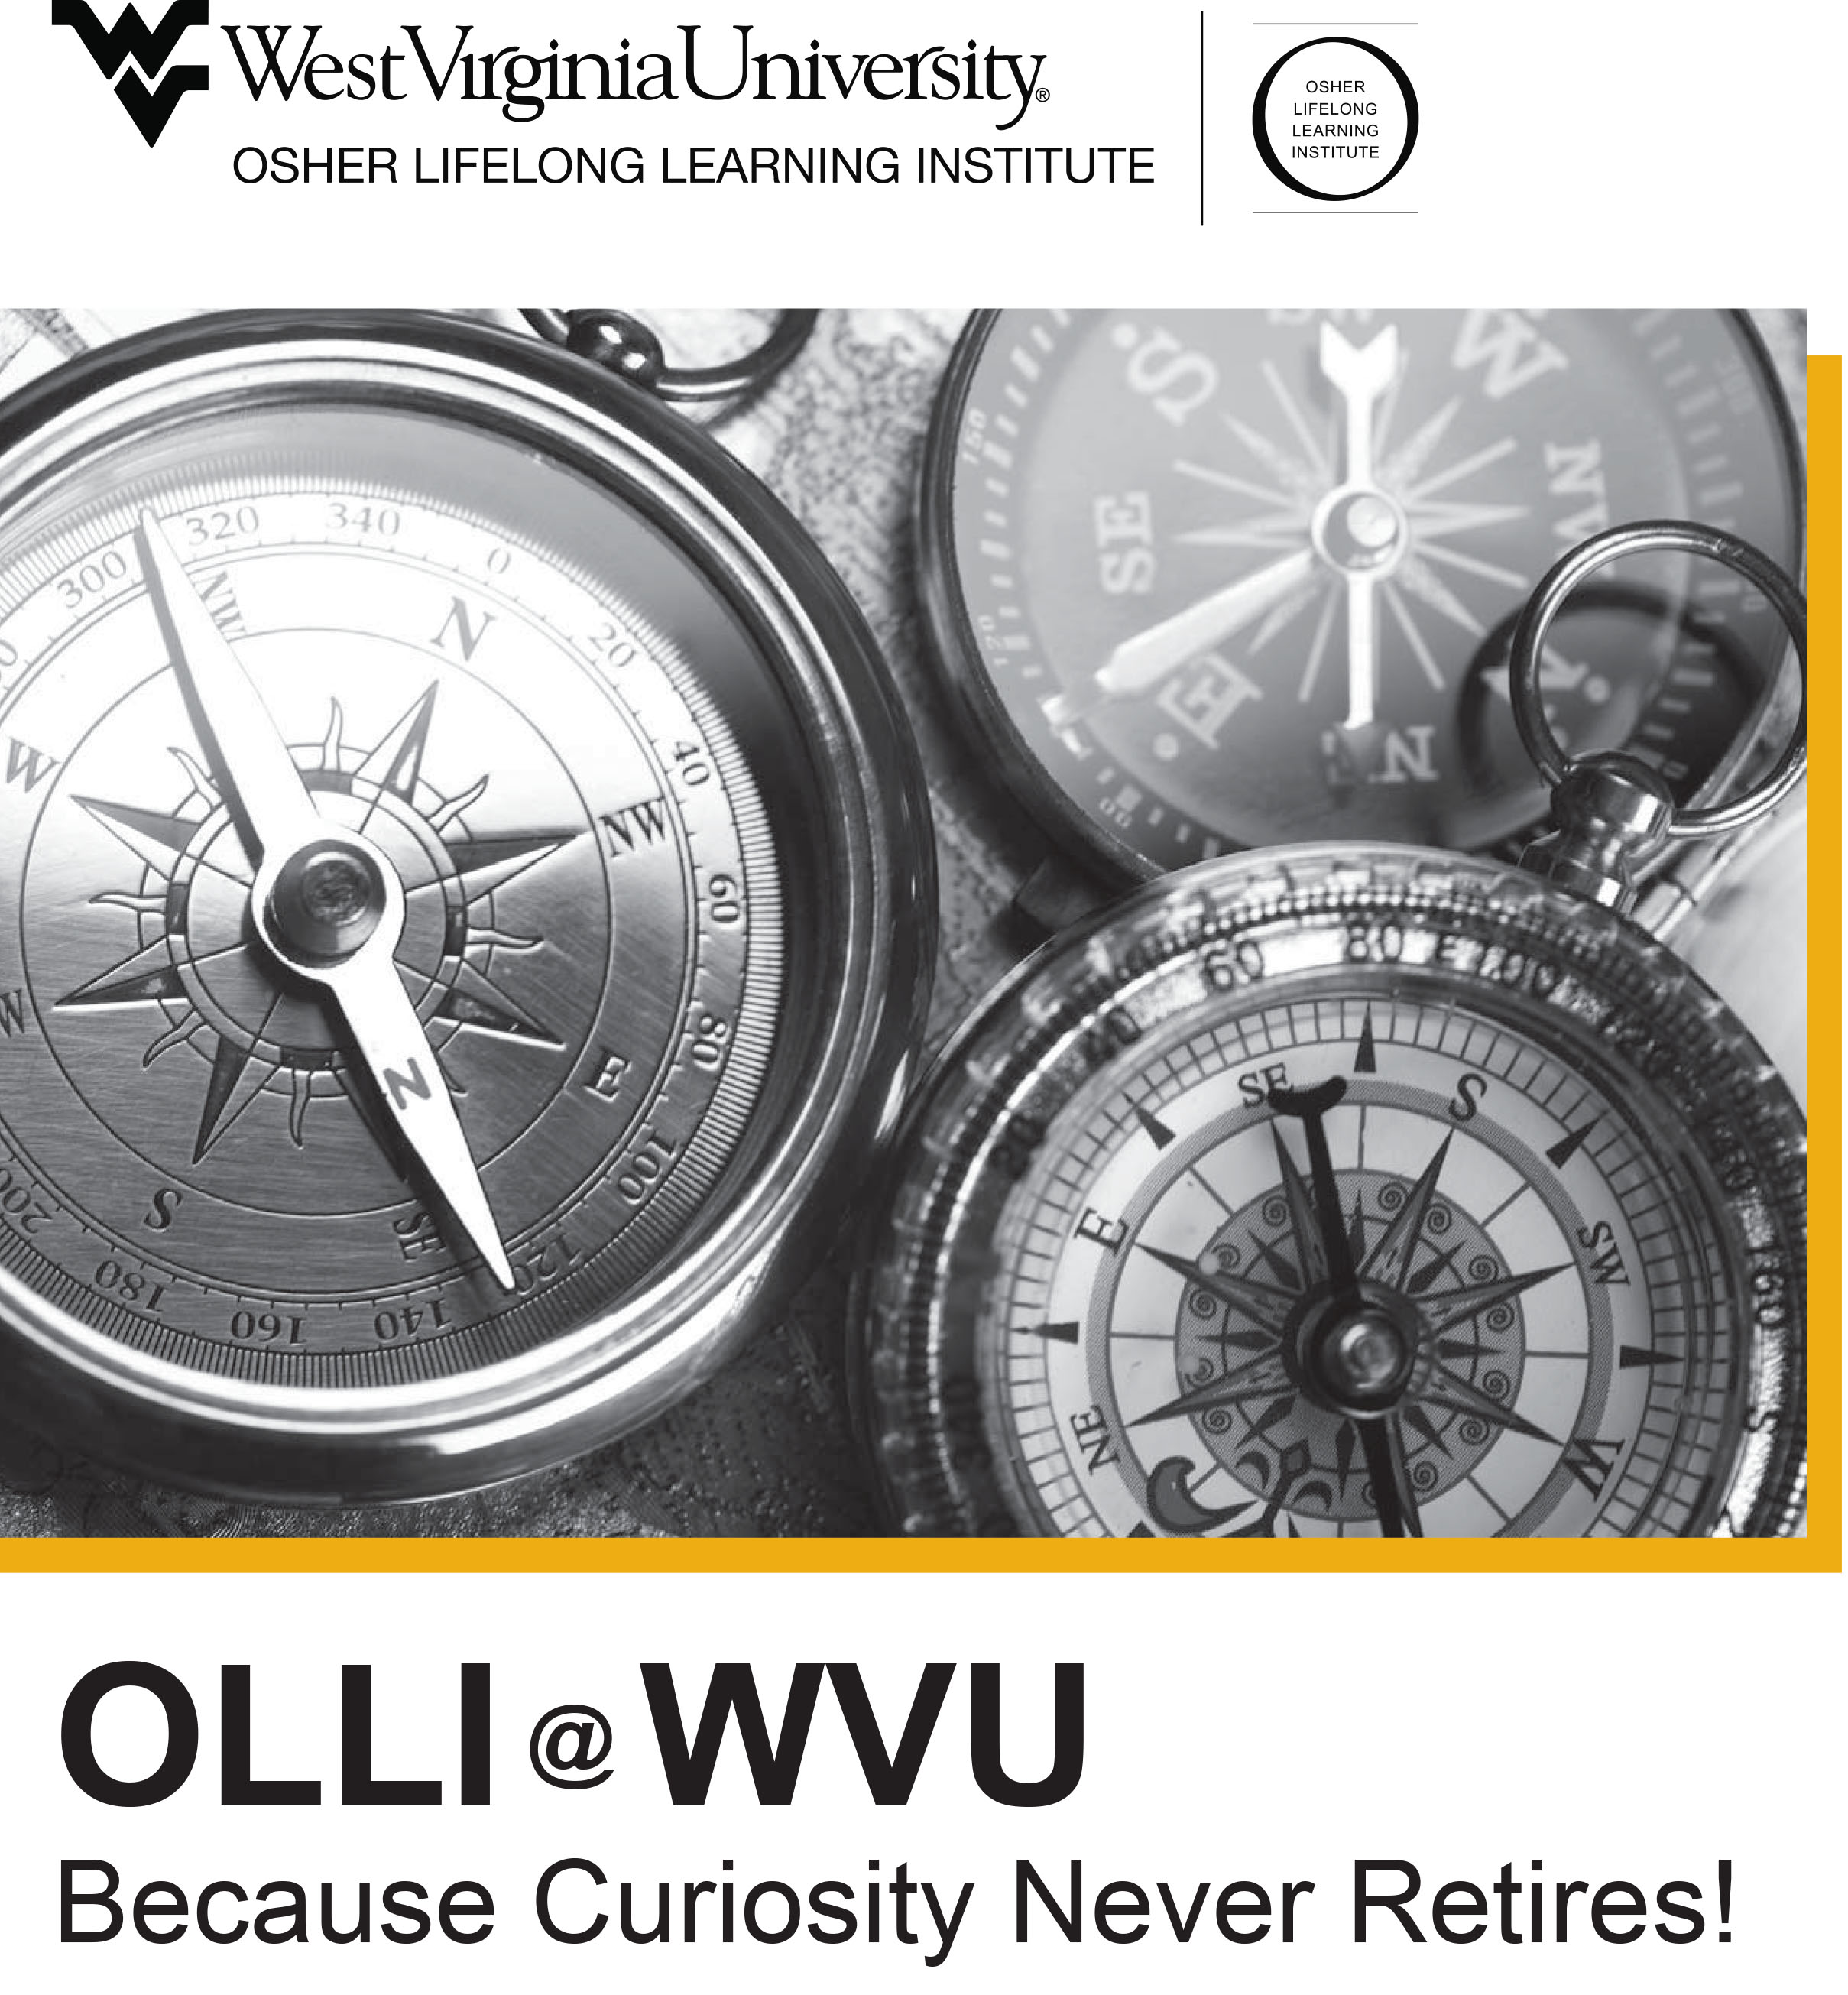 OLLI at WVU: Because Curiosity Never Retires